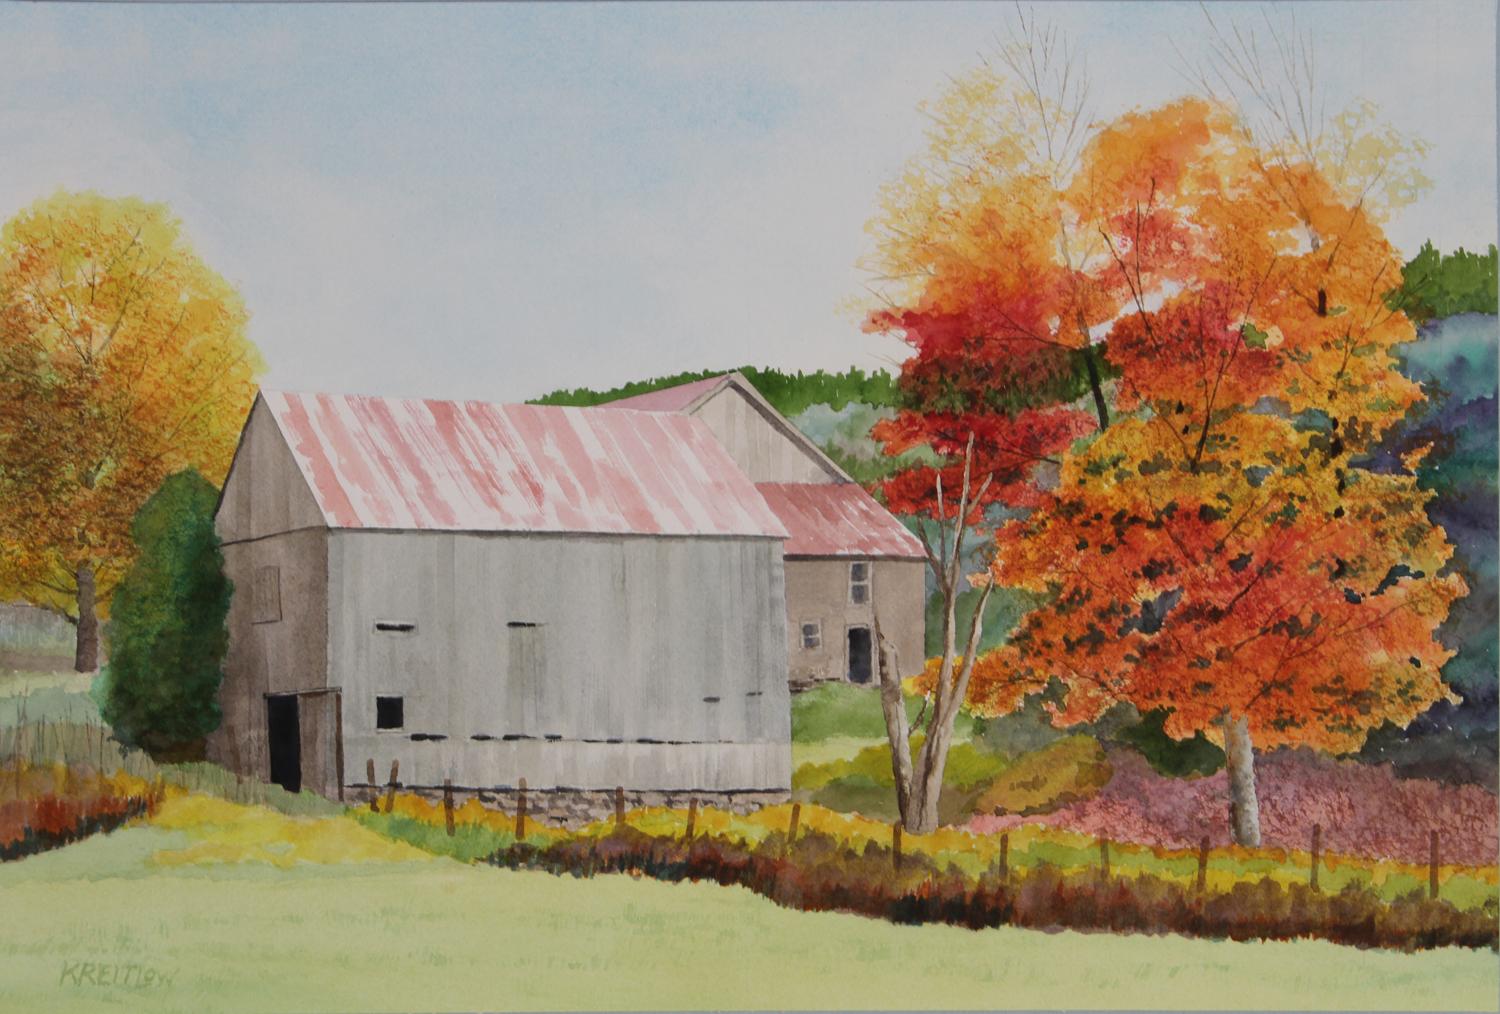 Bill Kreitlow Landscape Art - Abandoned Homestead, Original Painting